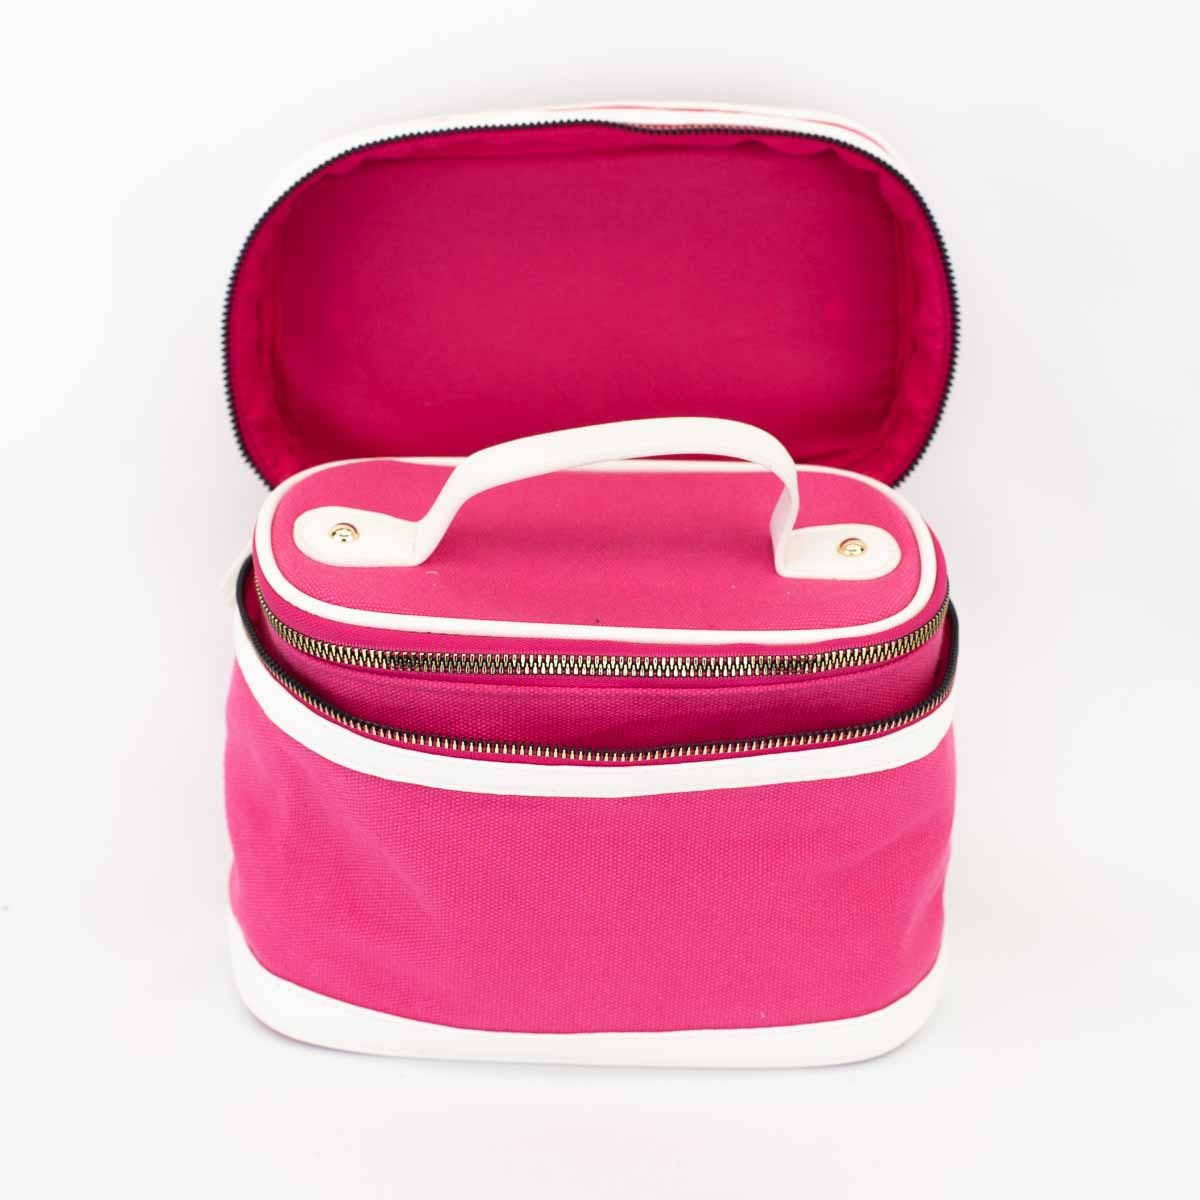 Sortino Train Case Set   Hot Pink/White  8.5x5.5x6.5